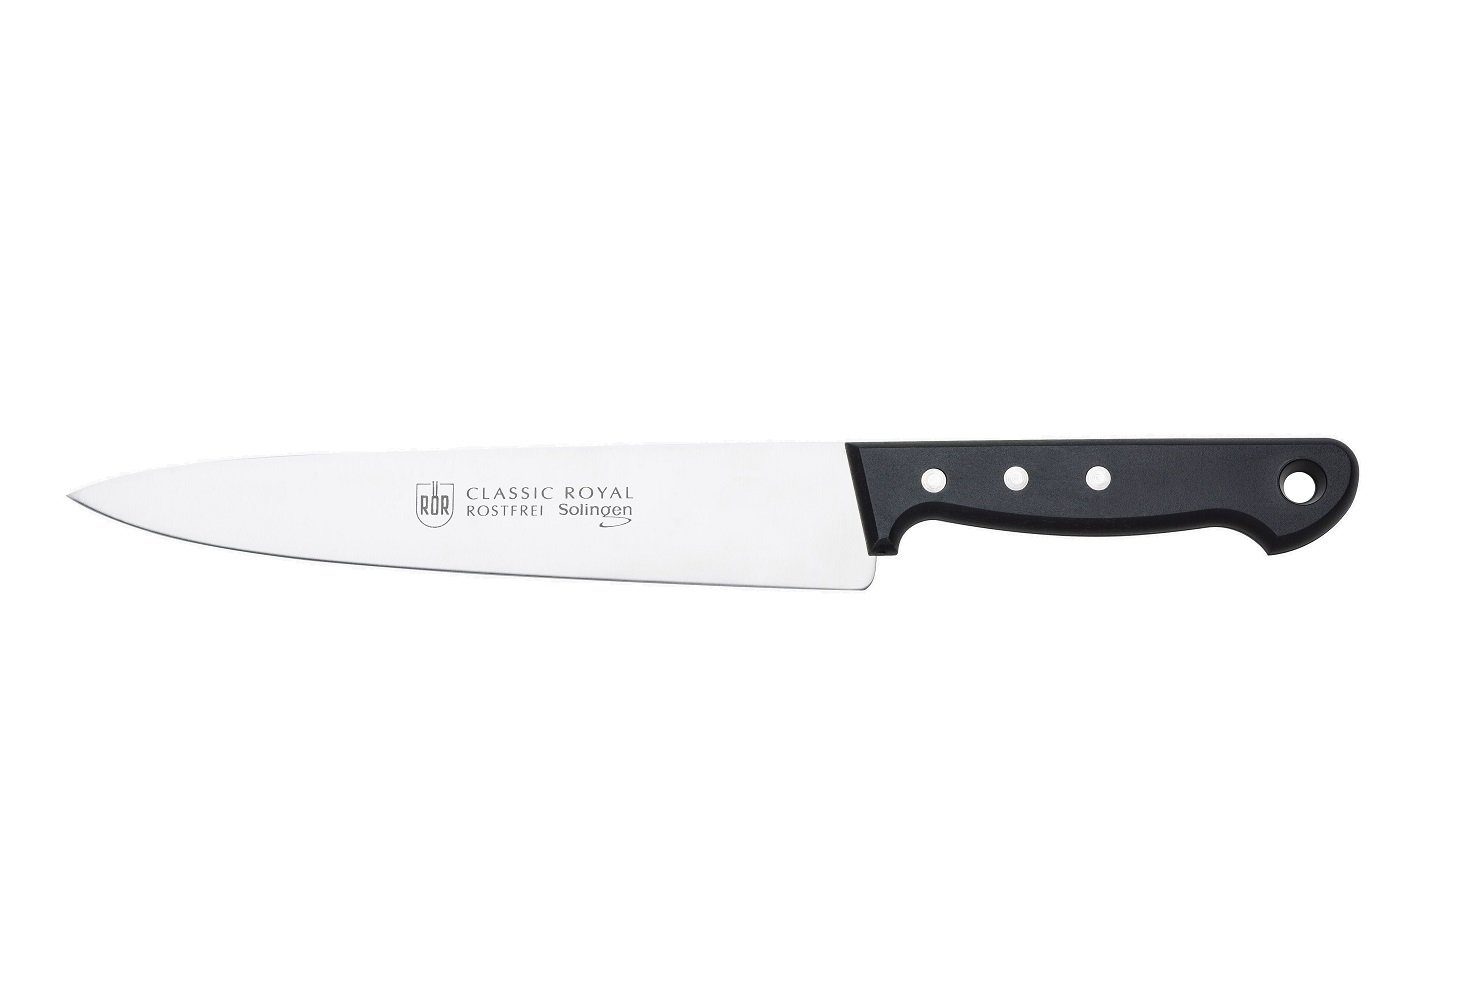 RÖR Kochmesser 10266, Classic Royal Kochmesser, hochwertiger Messerstahl - Griff mit Nieten - Made in Solingen | Kochmesser